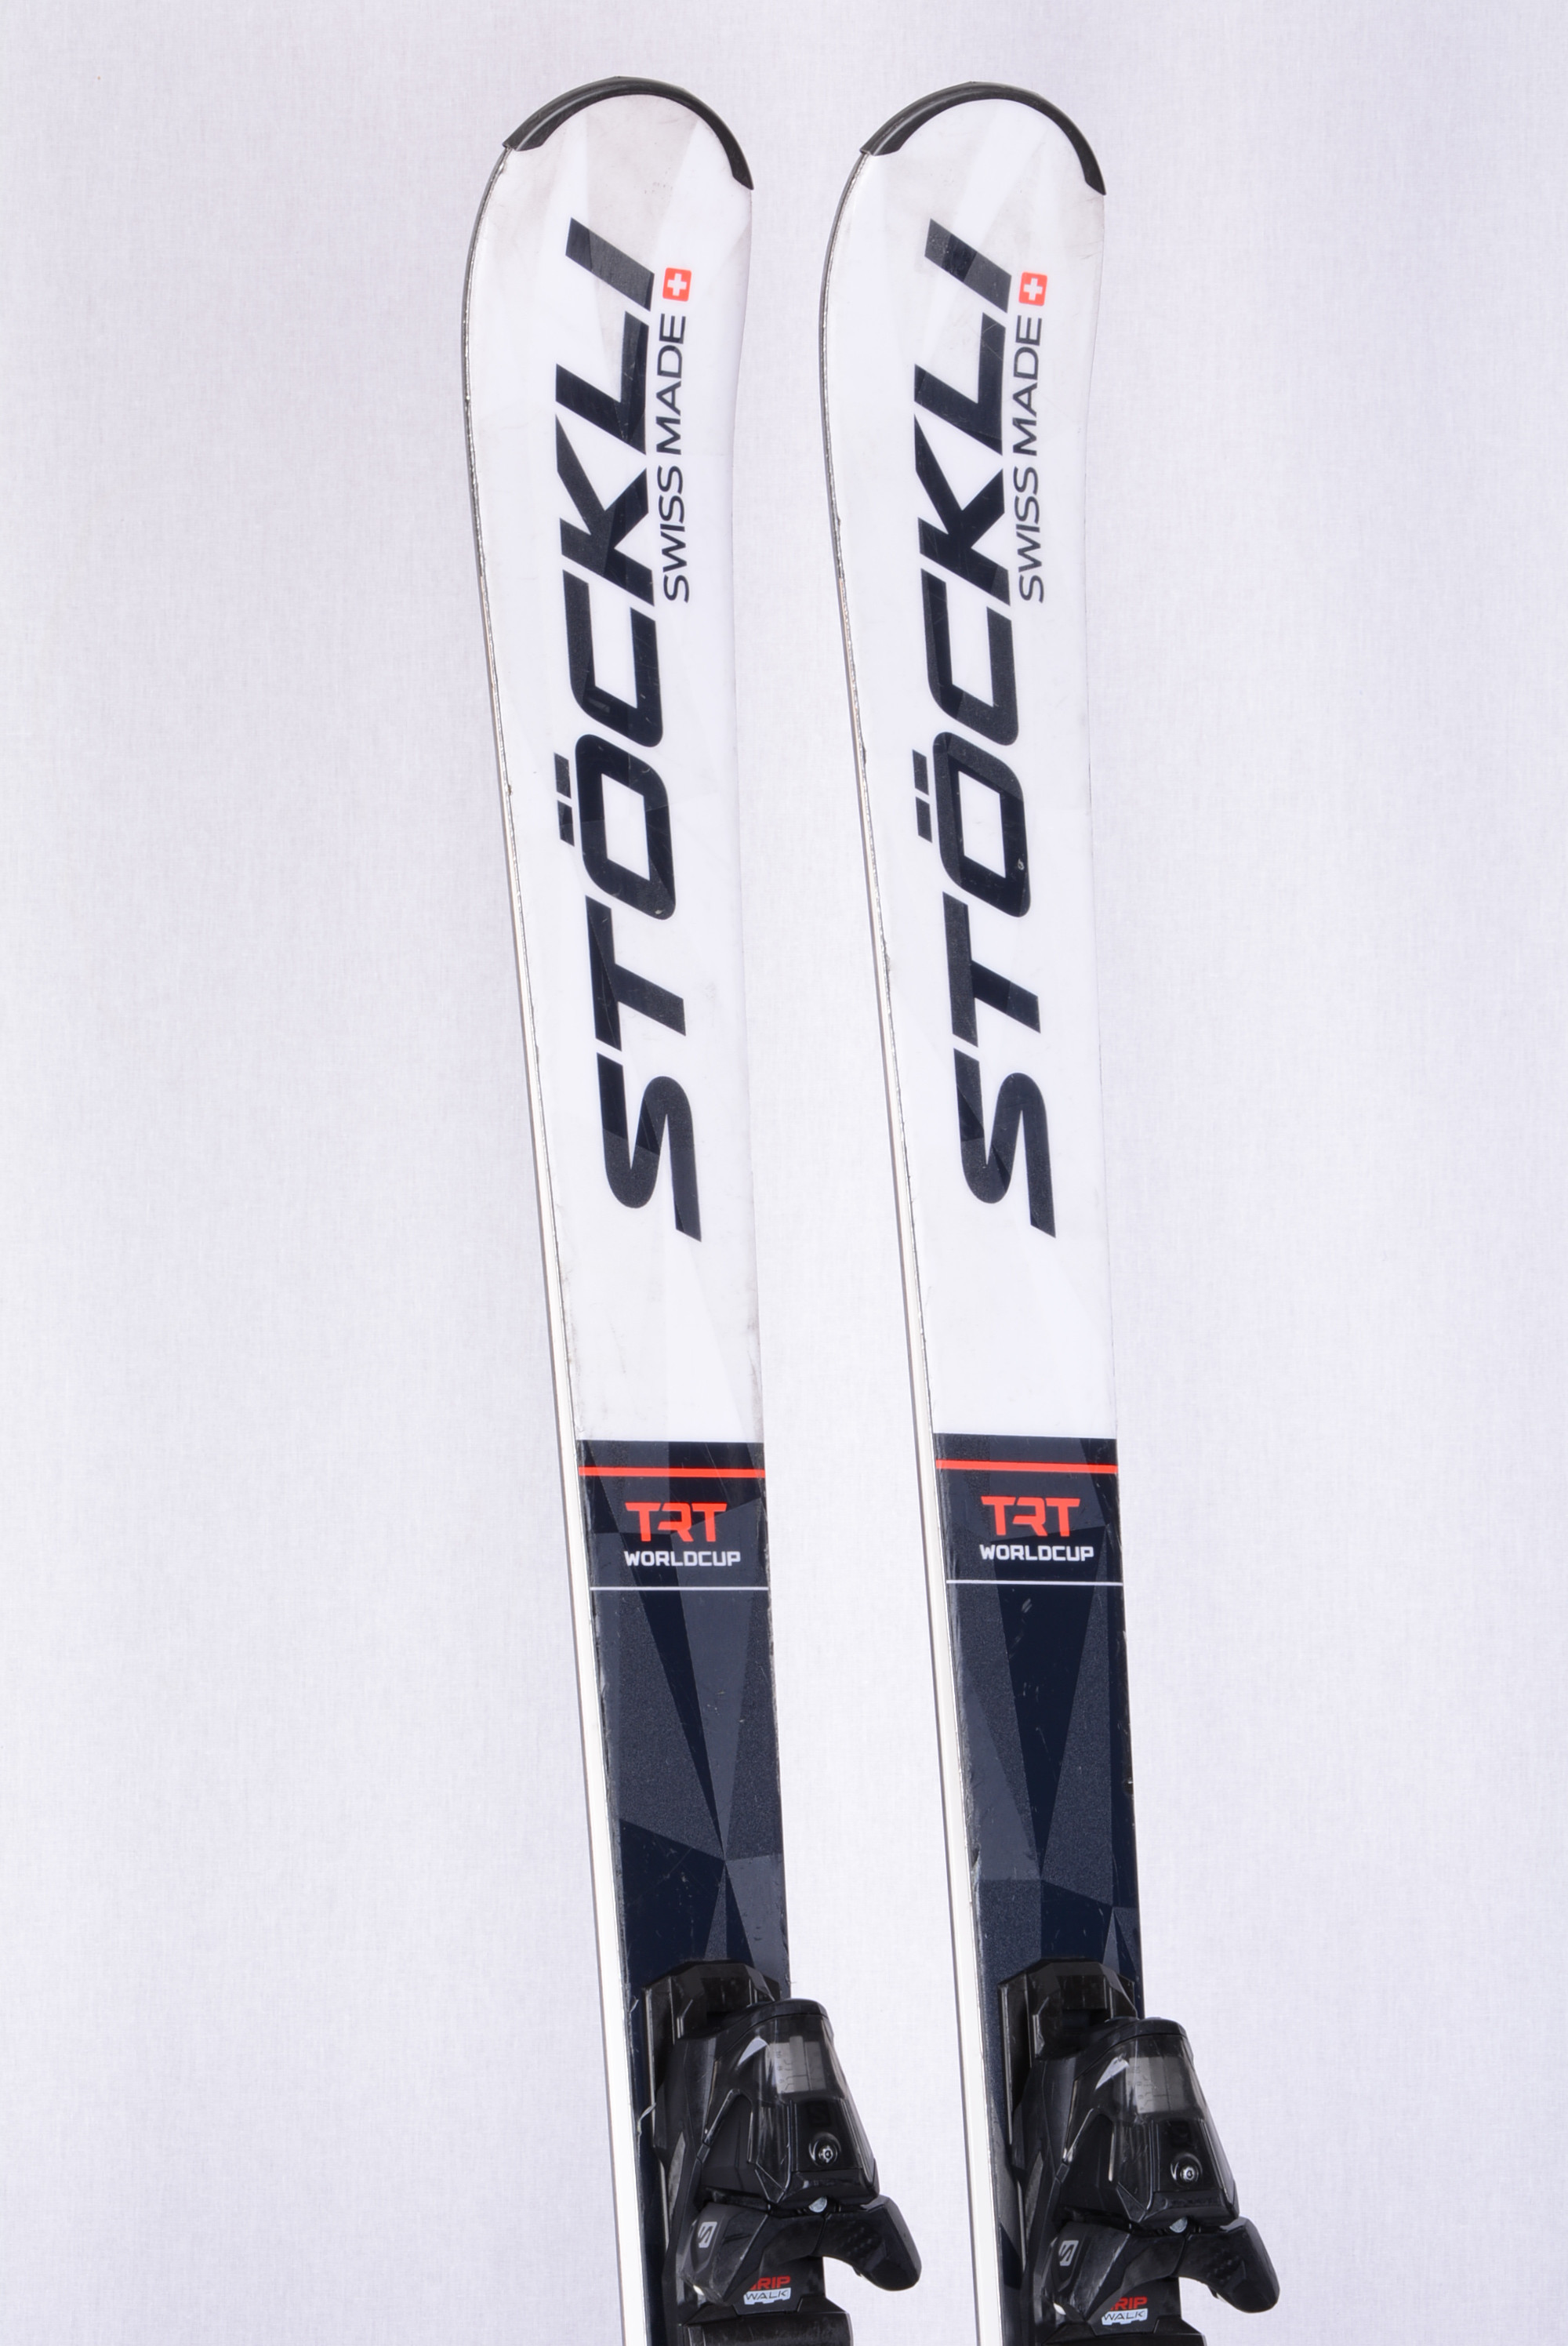 skis STOCKLI LASER SC TRT WORLDCUP 2020, grip walk + Salomon M10